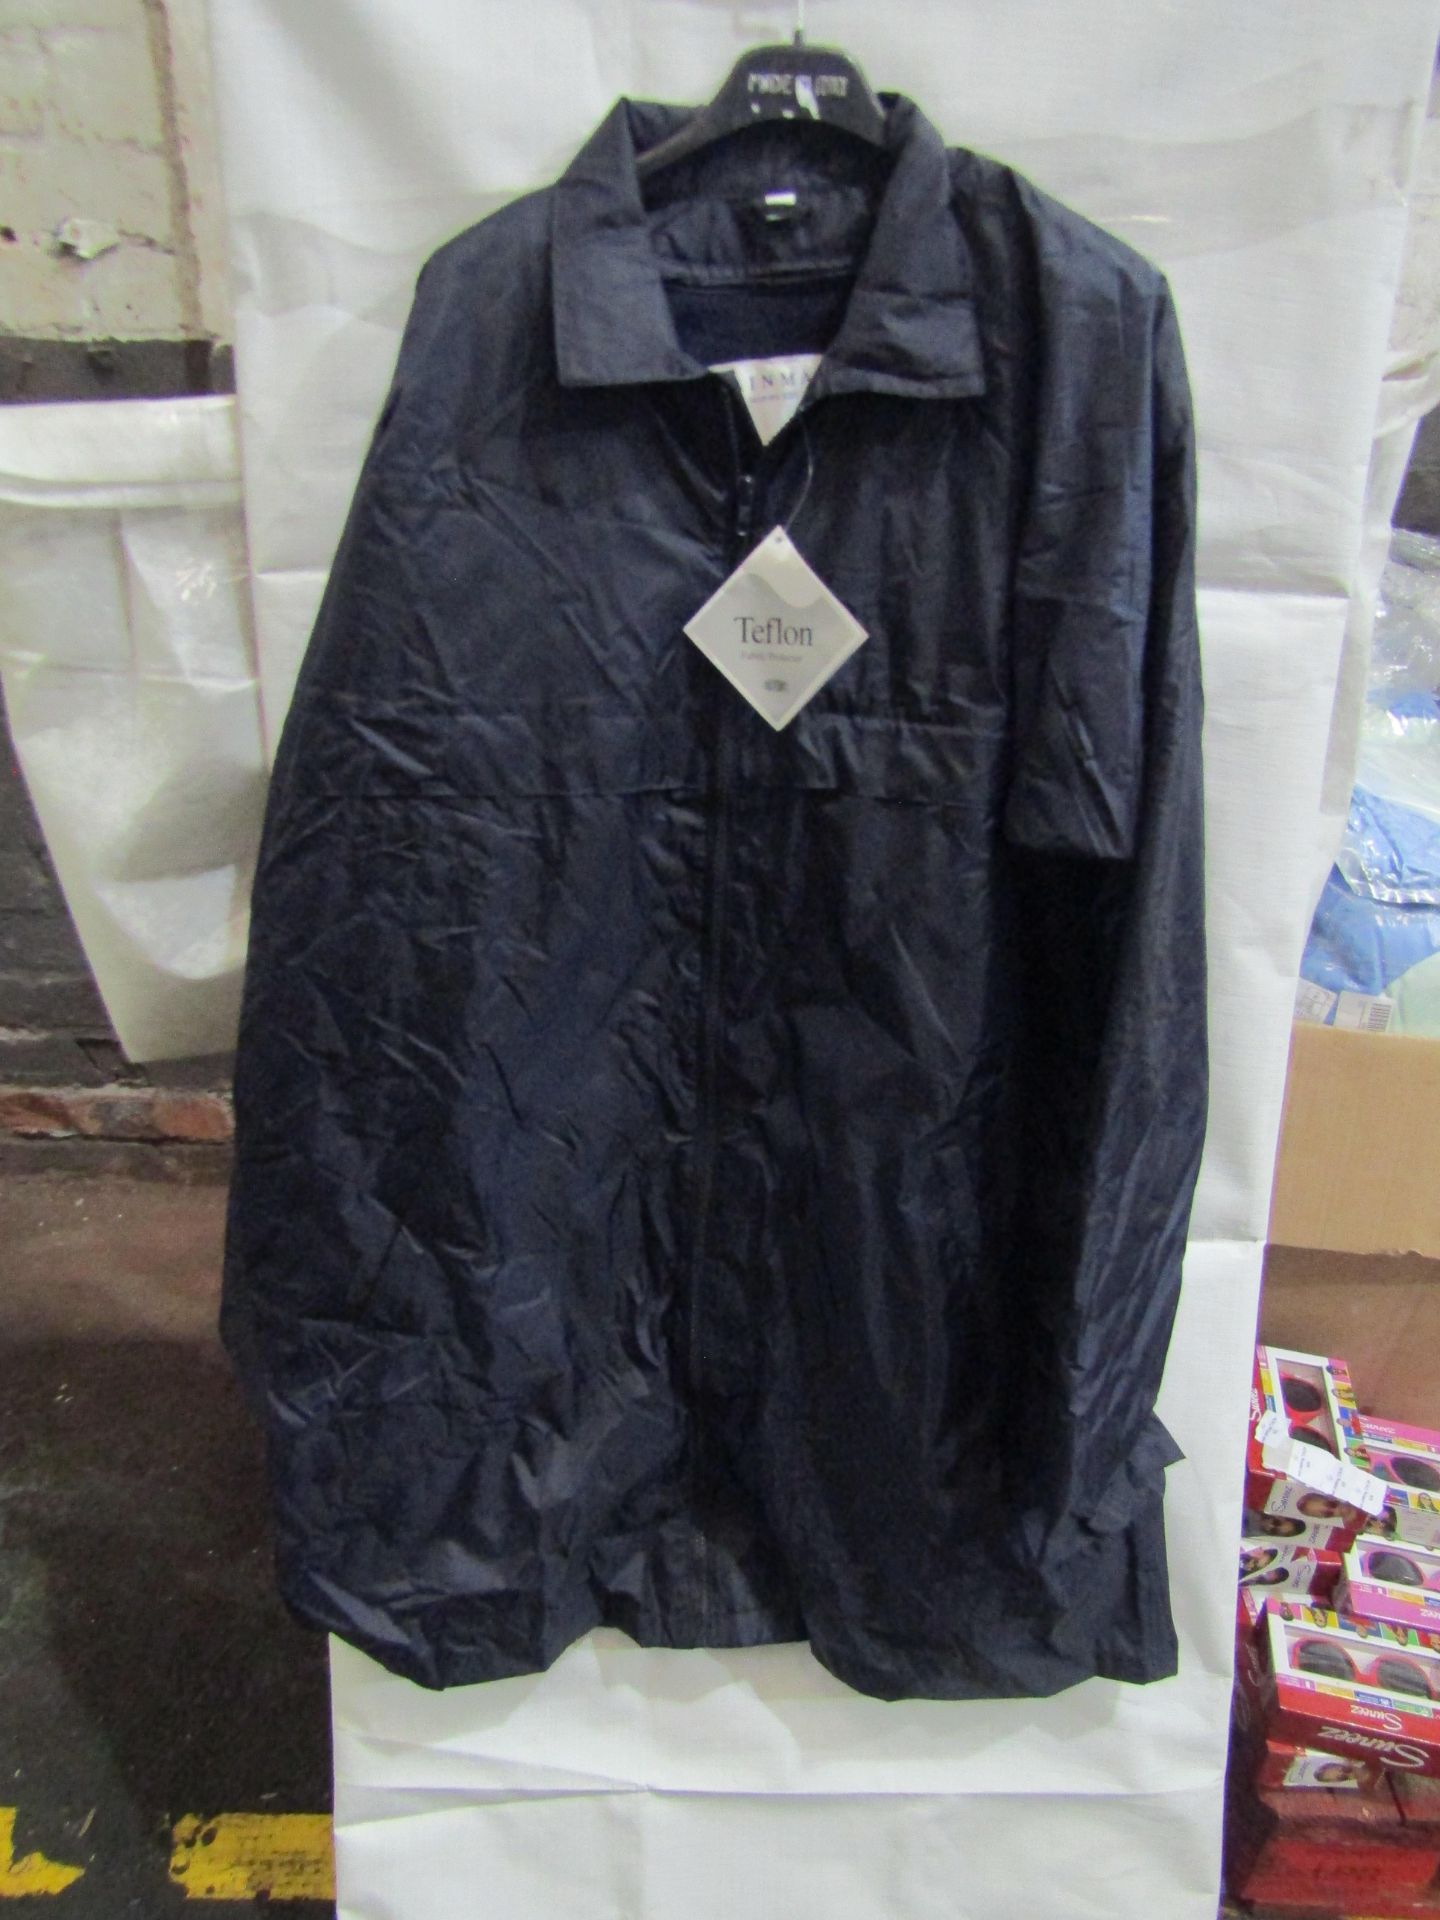 Rainmac With Inner Detachable Fleece, Navy, Size 20, Unworn & Packaged.